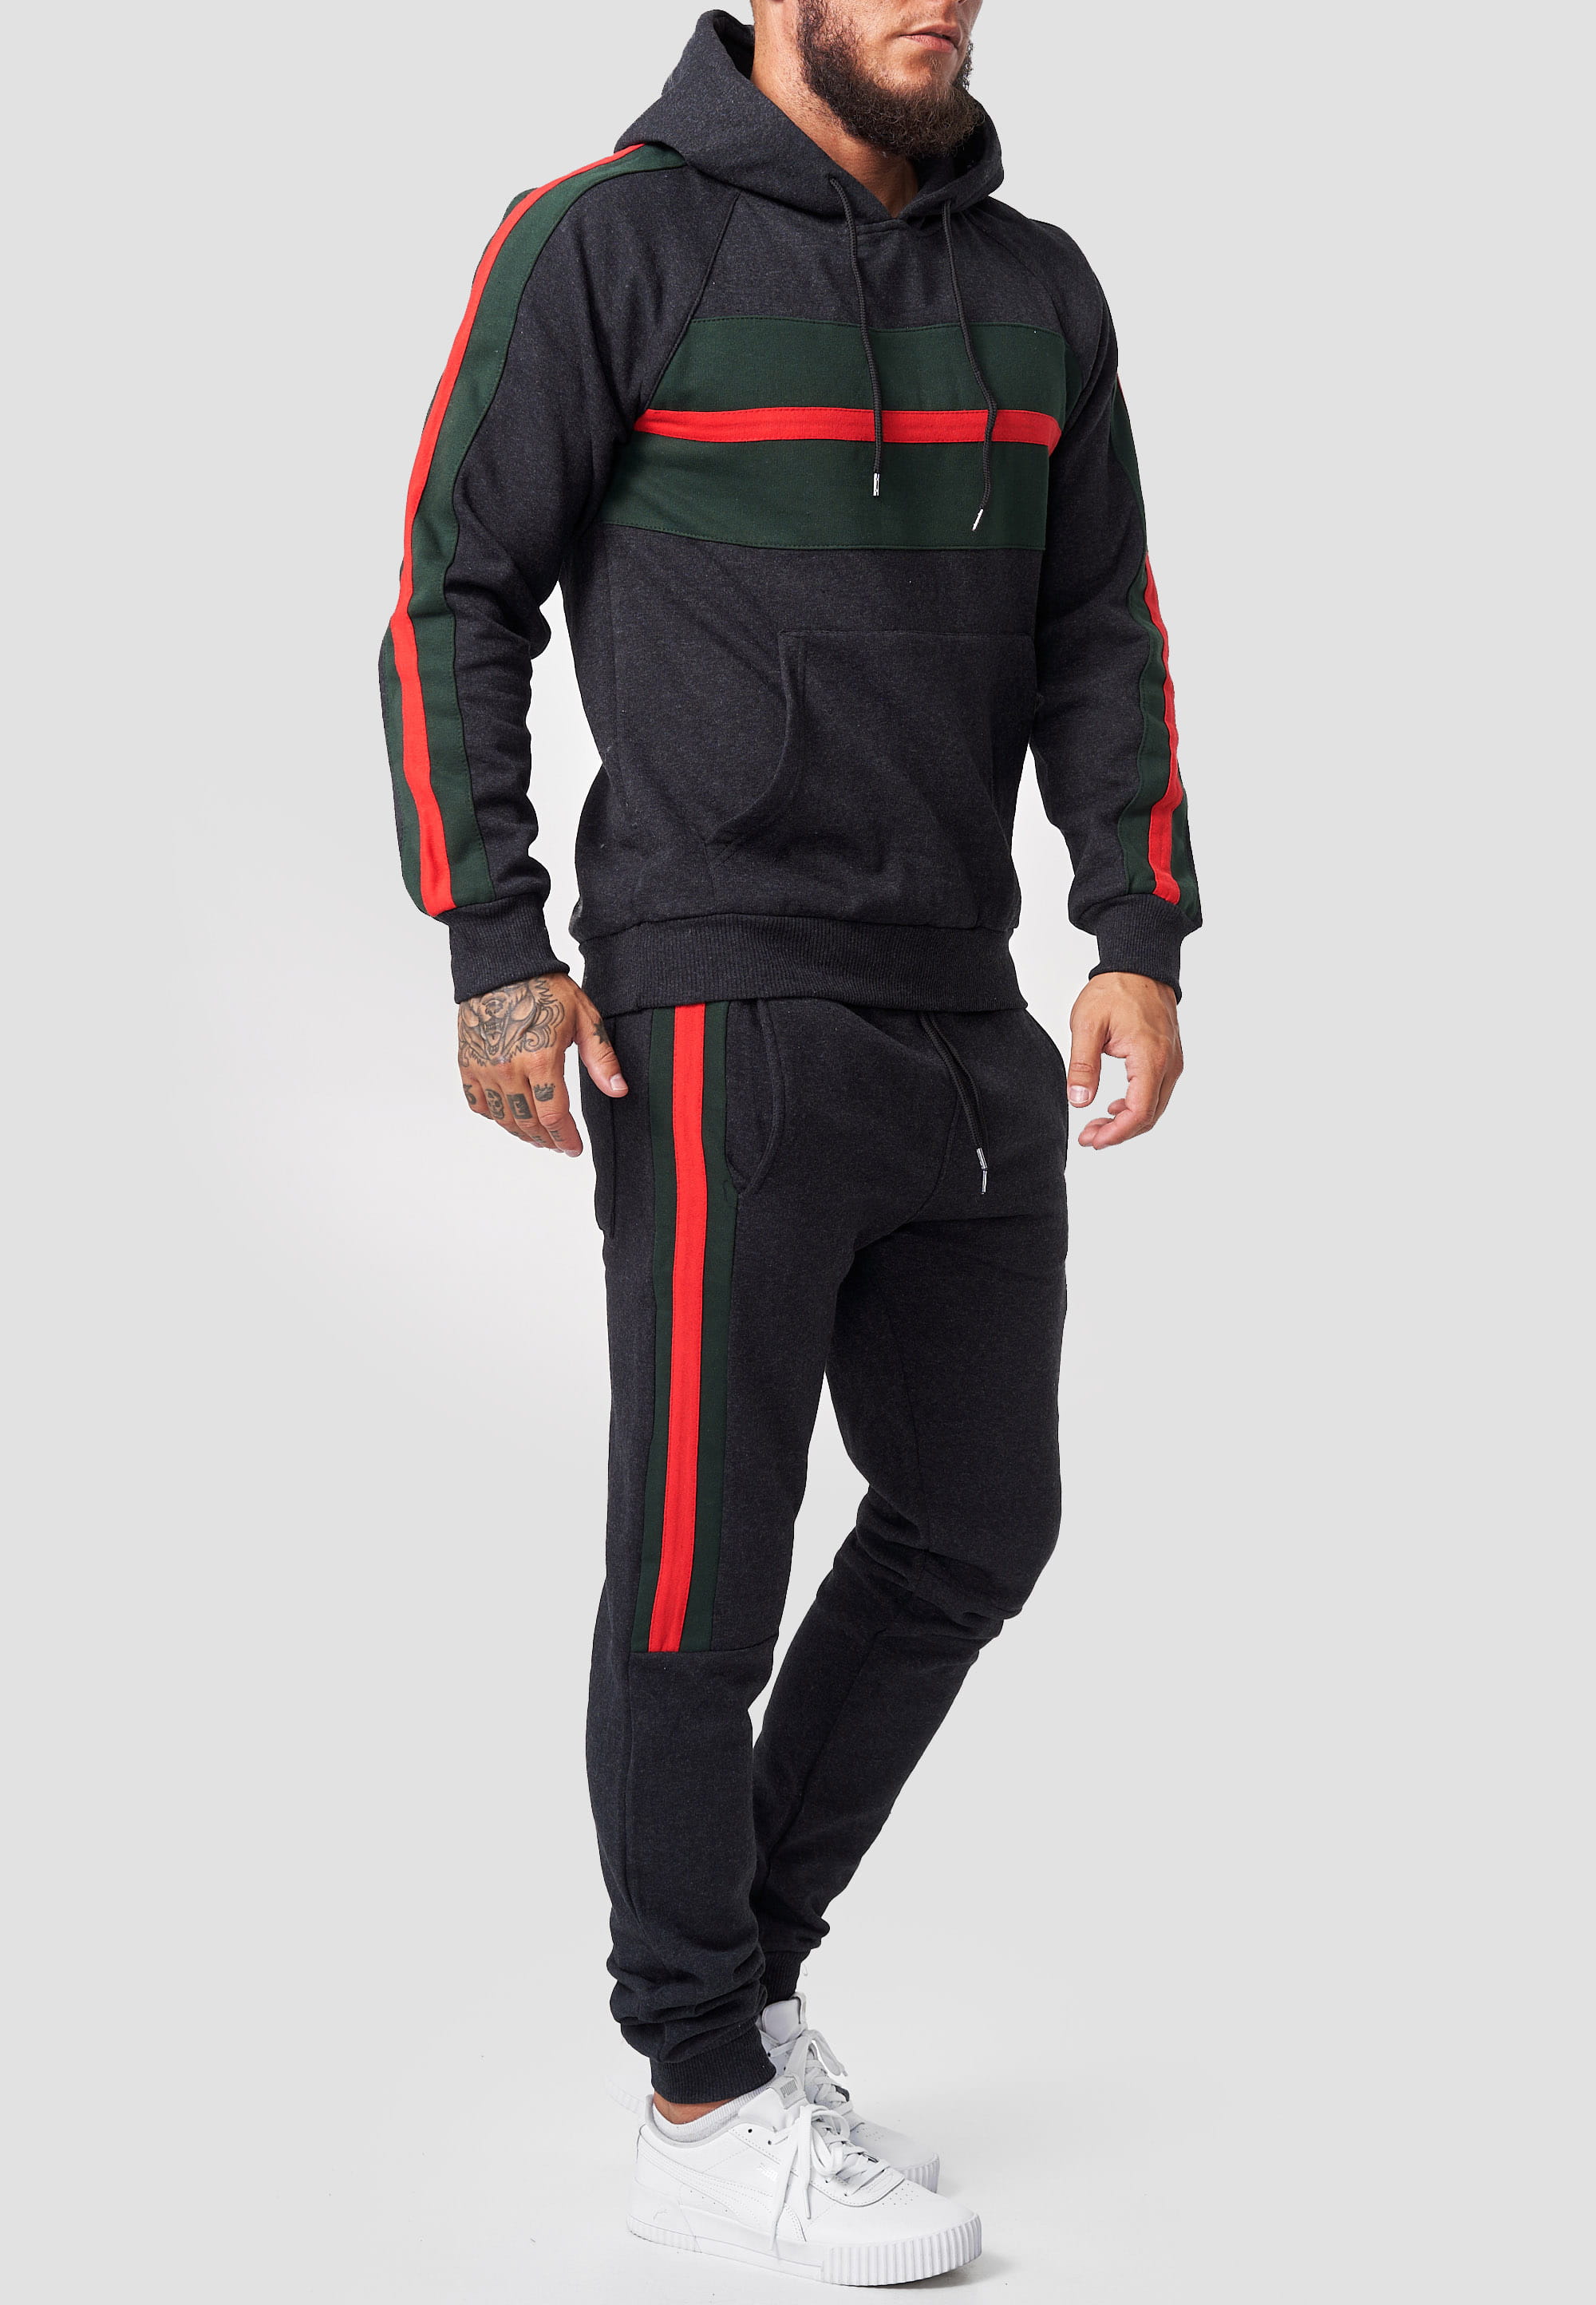 OneRedox Herren Jogginganzug Sportanzug Männer Trainingsanzug Fitness Sporthose und Trainingsjacke Modell 1148 